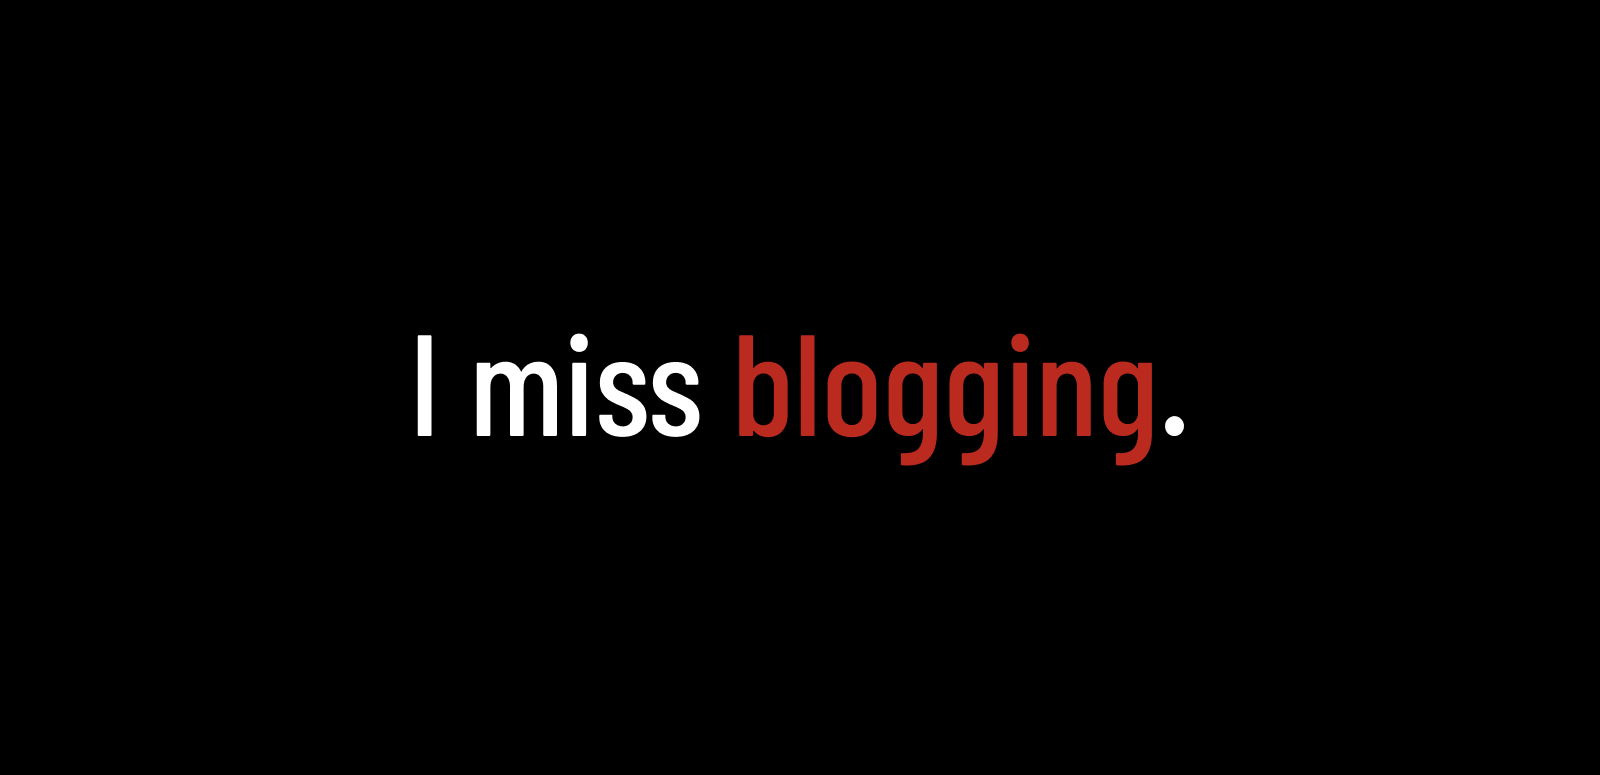 I miss blogging